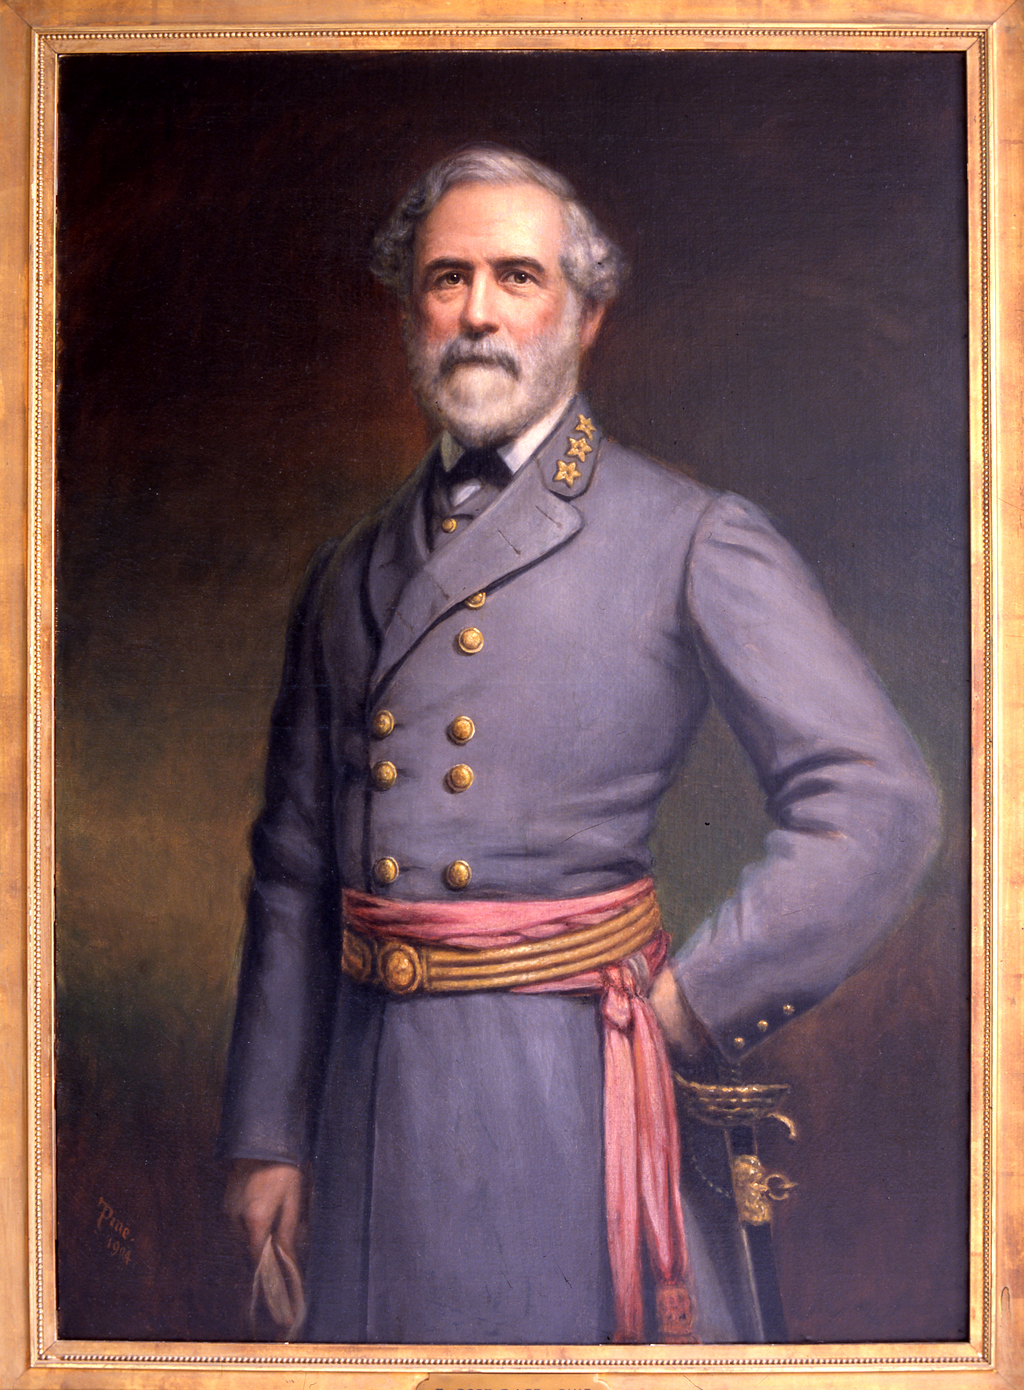 Robert E. Lee, by Theodore Pine